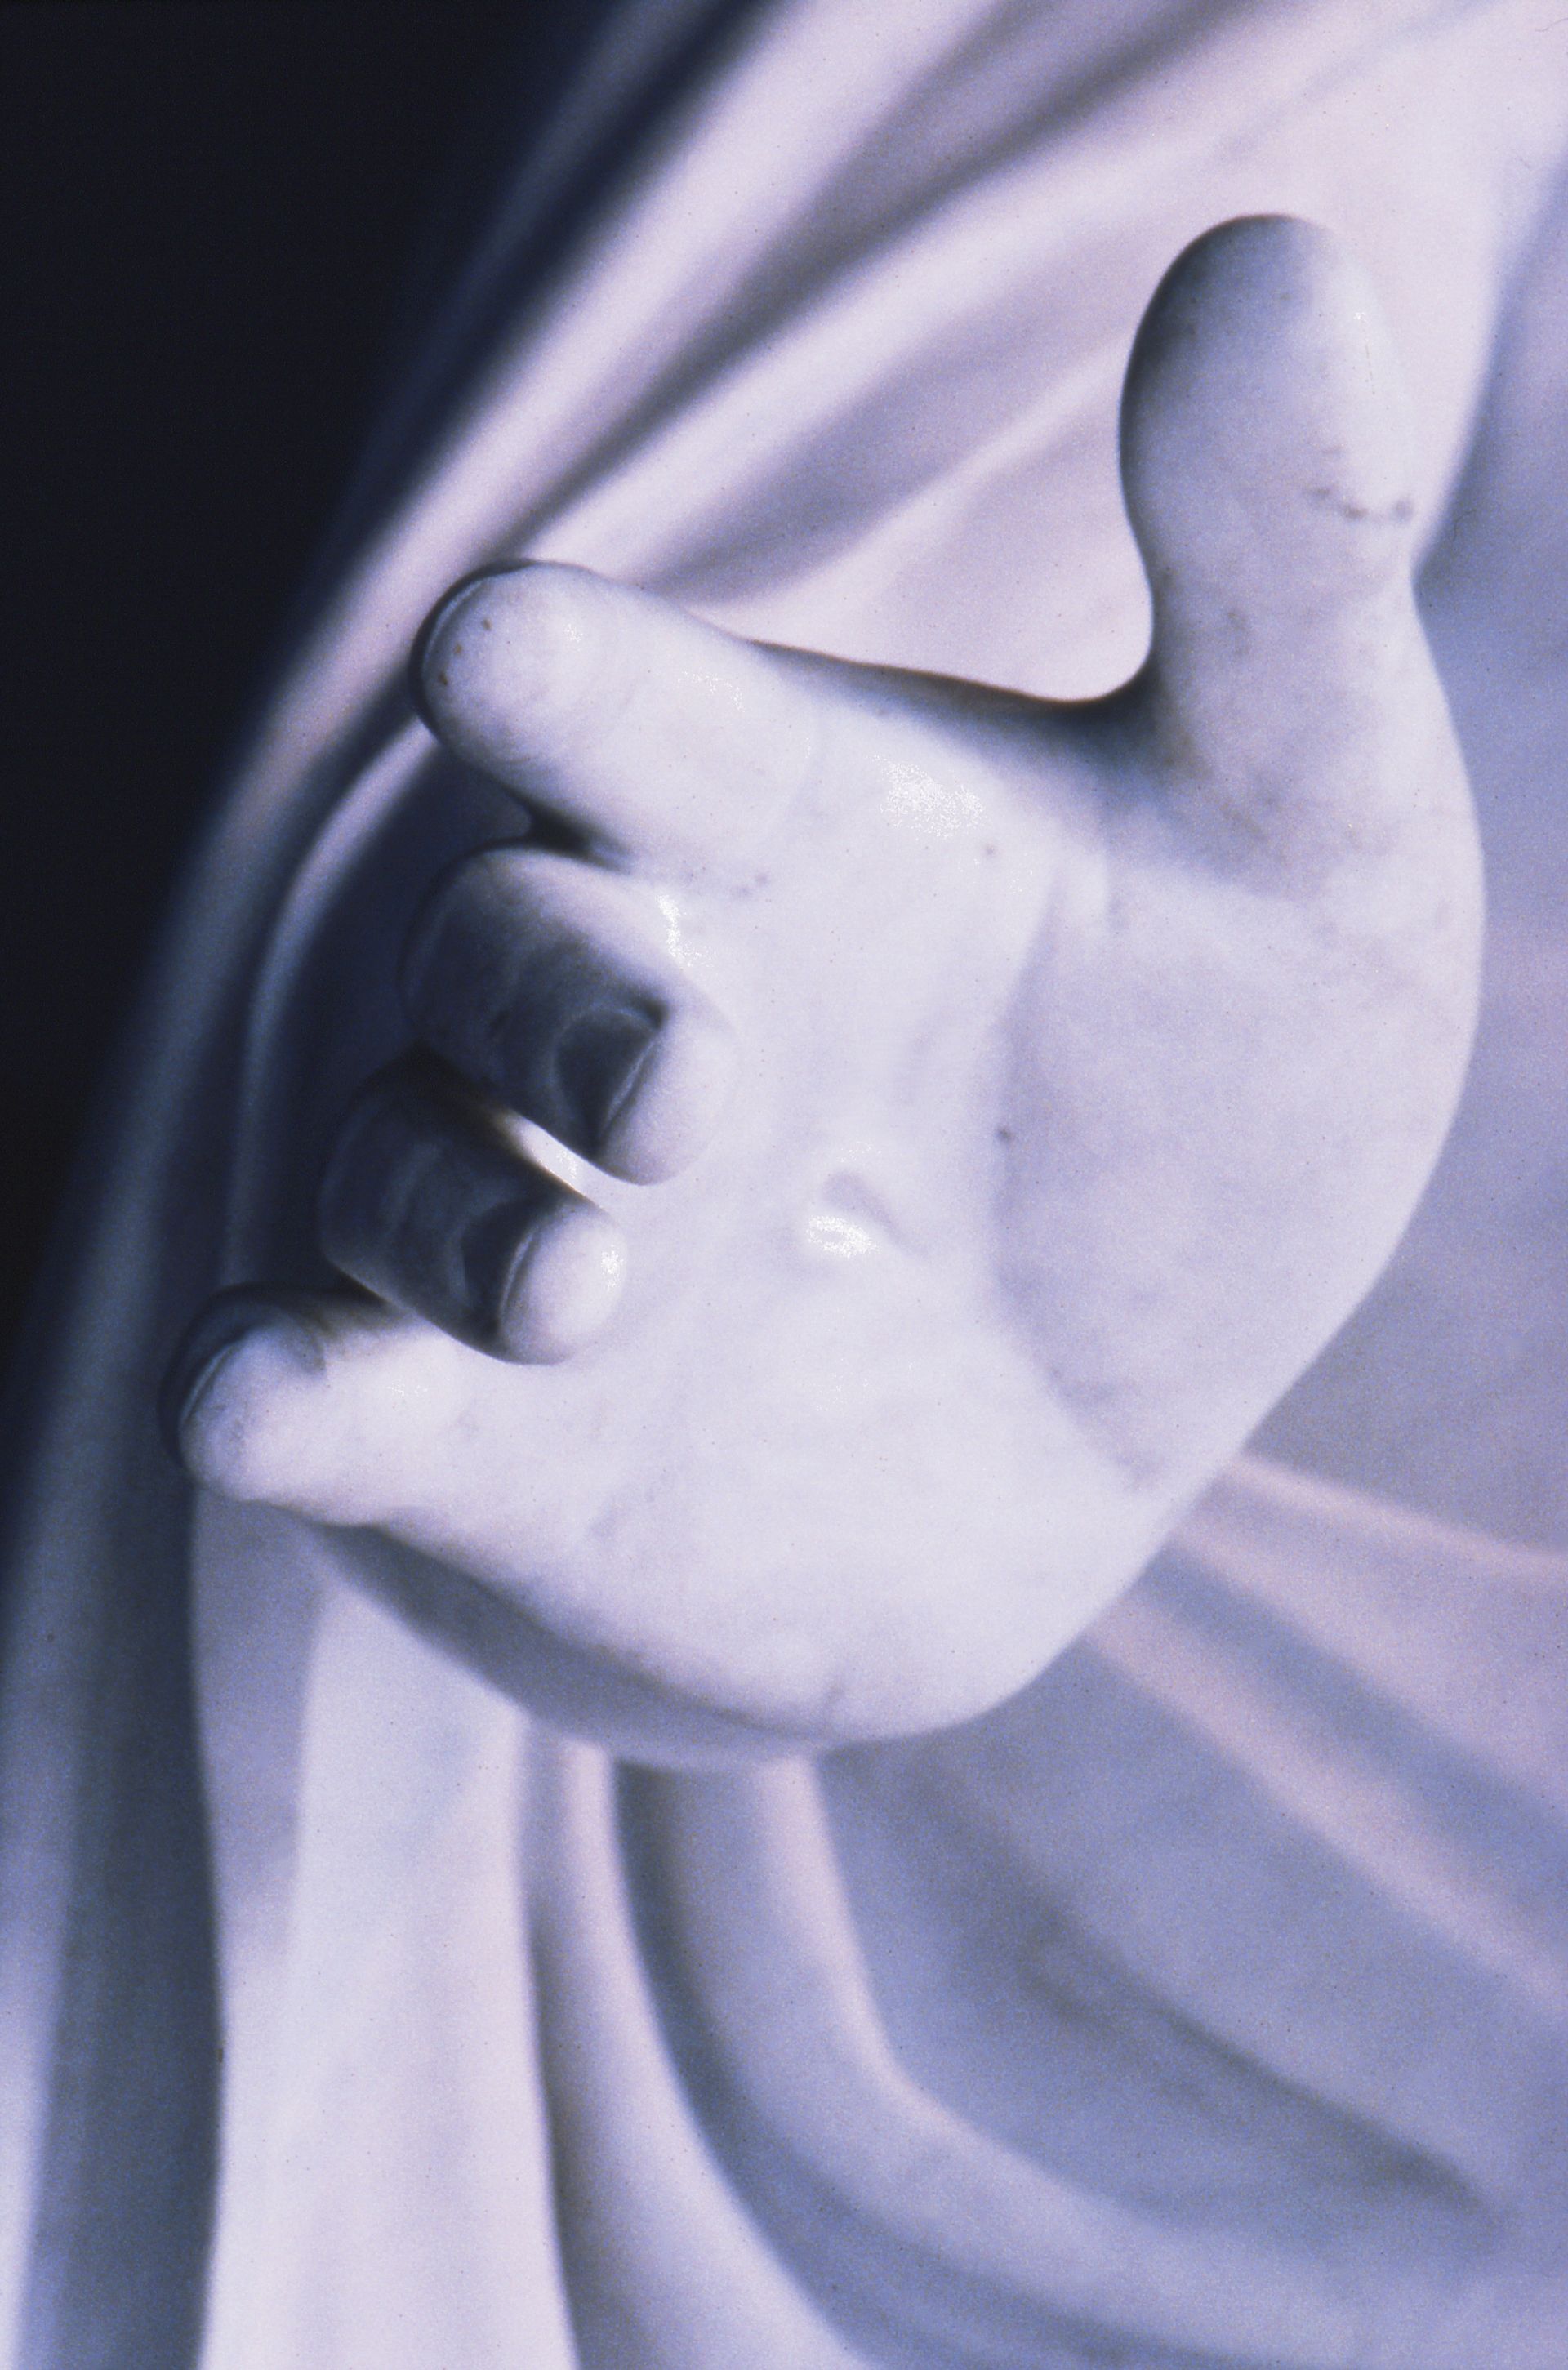 Detalle de la mano de la réplica de la estatua del Christus, de Bertel Thorvaldsen, del Centro de visitantes norte de Salt Lake.